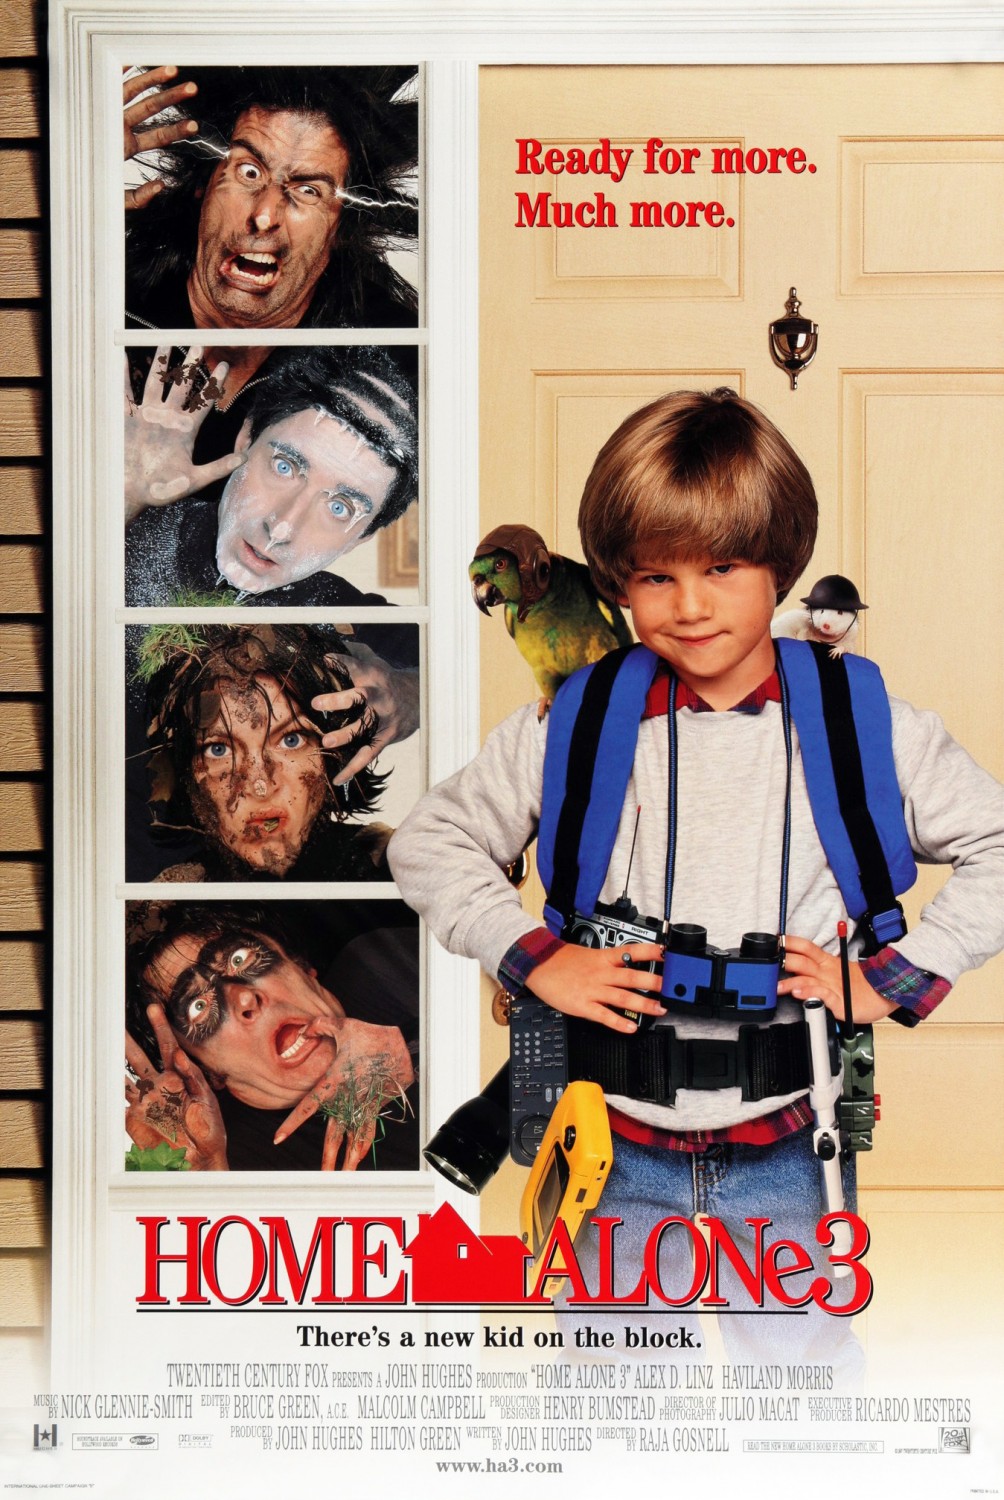 FULL MOVIE: Home Alone 3 (1997)